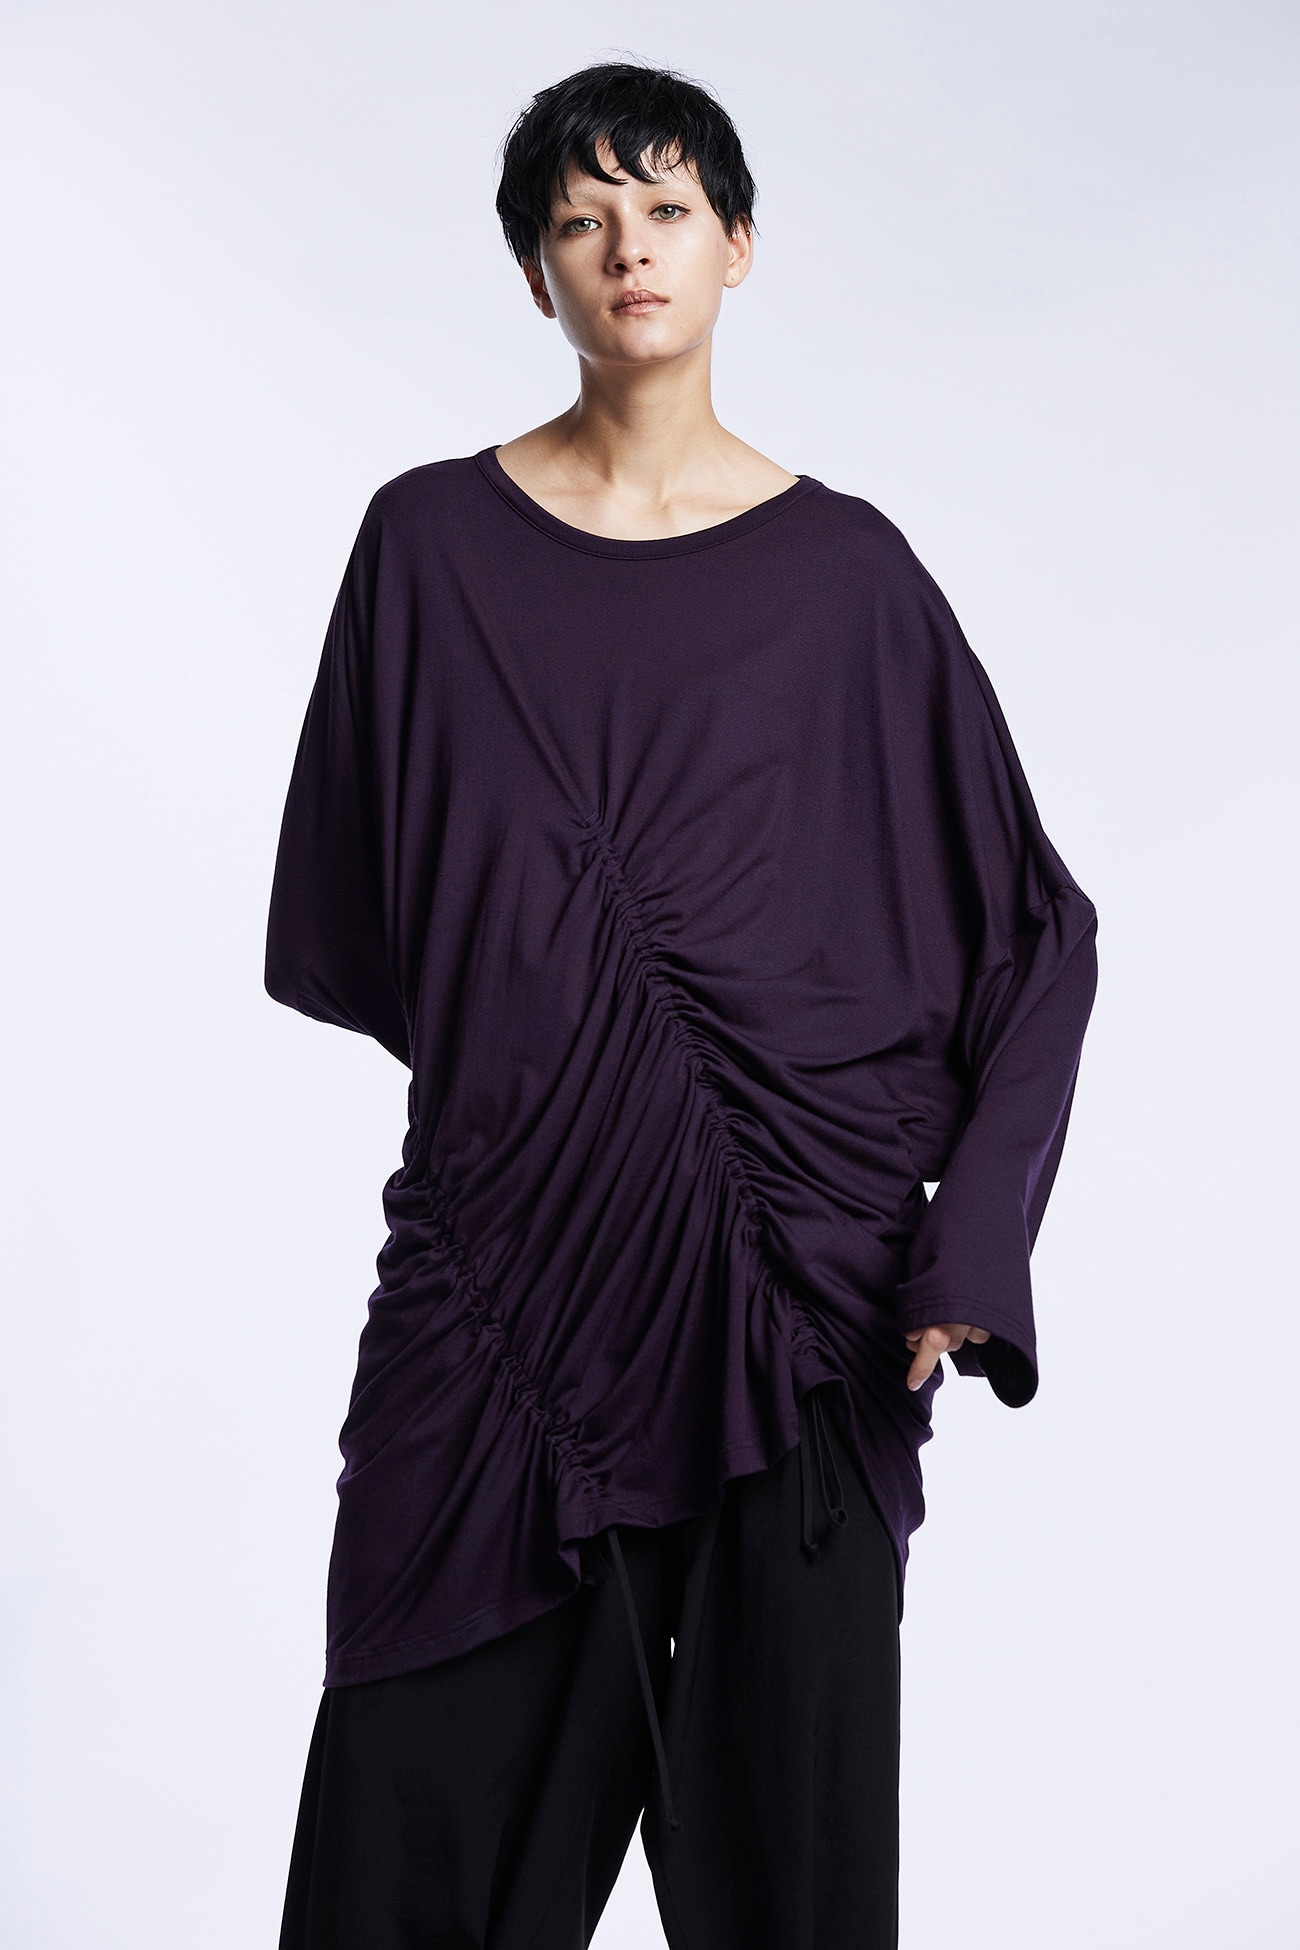 B/Rexcell Wool Cross Drawstring T-shirt(S Purple): Vintage 1.1 